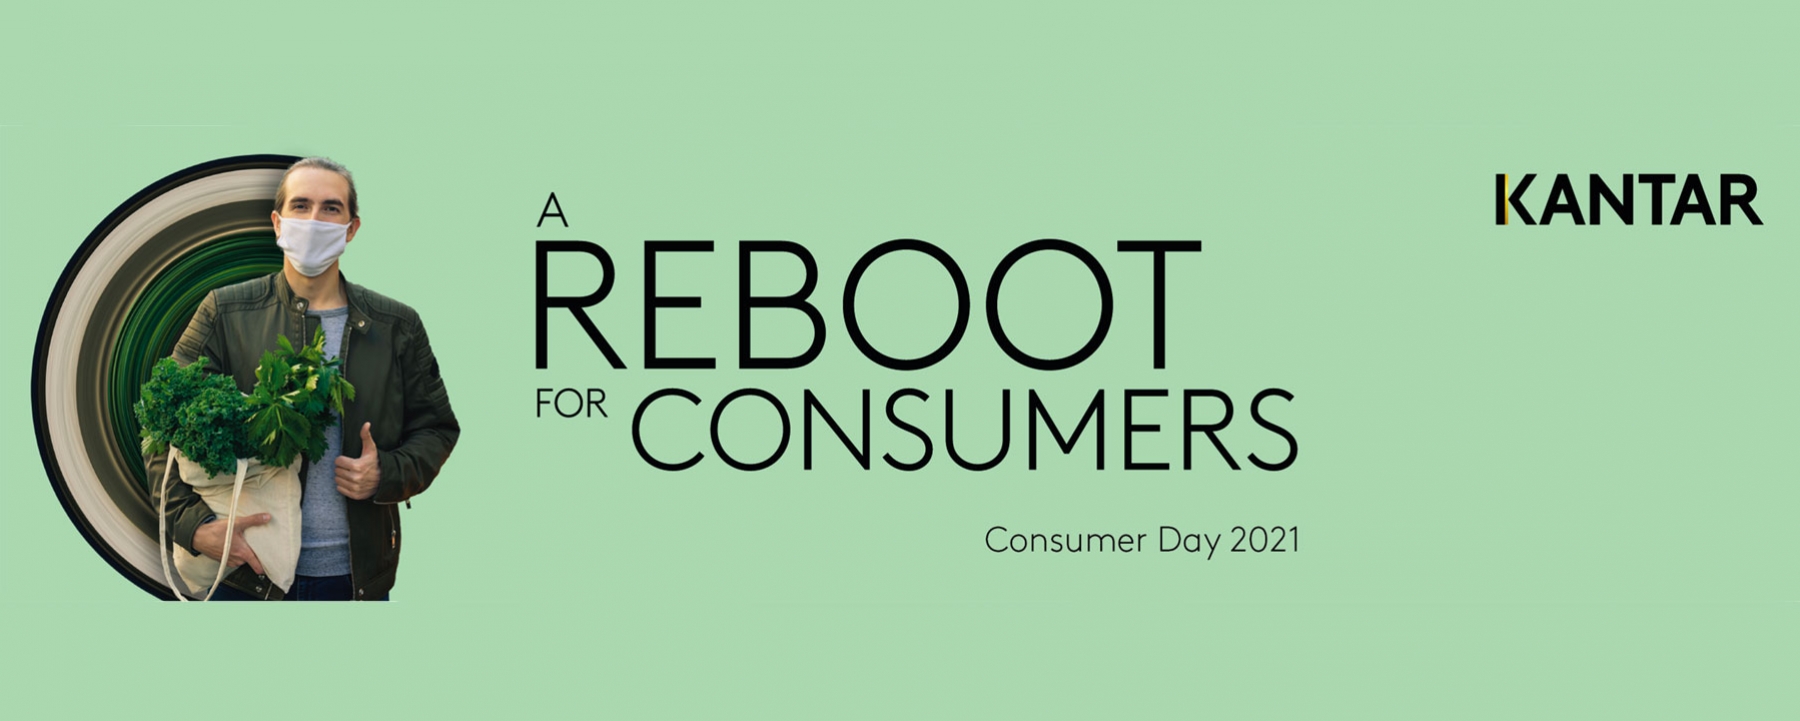 Consumer day 2021